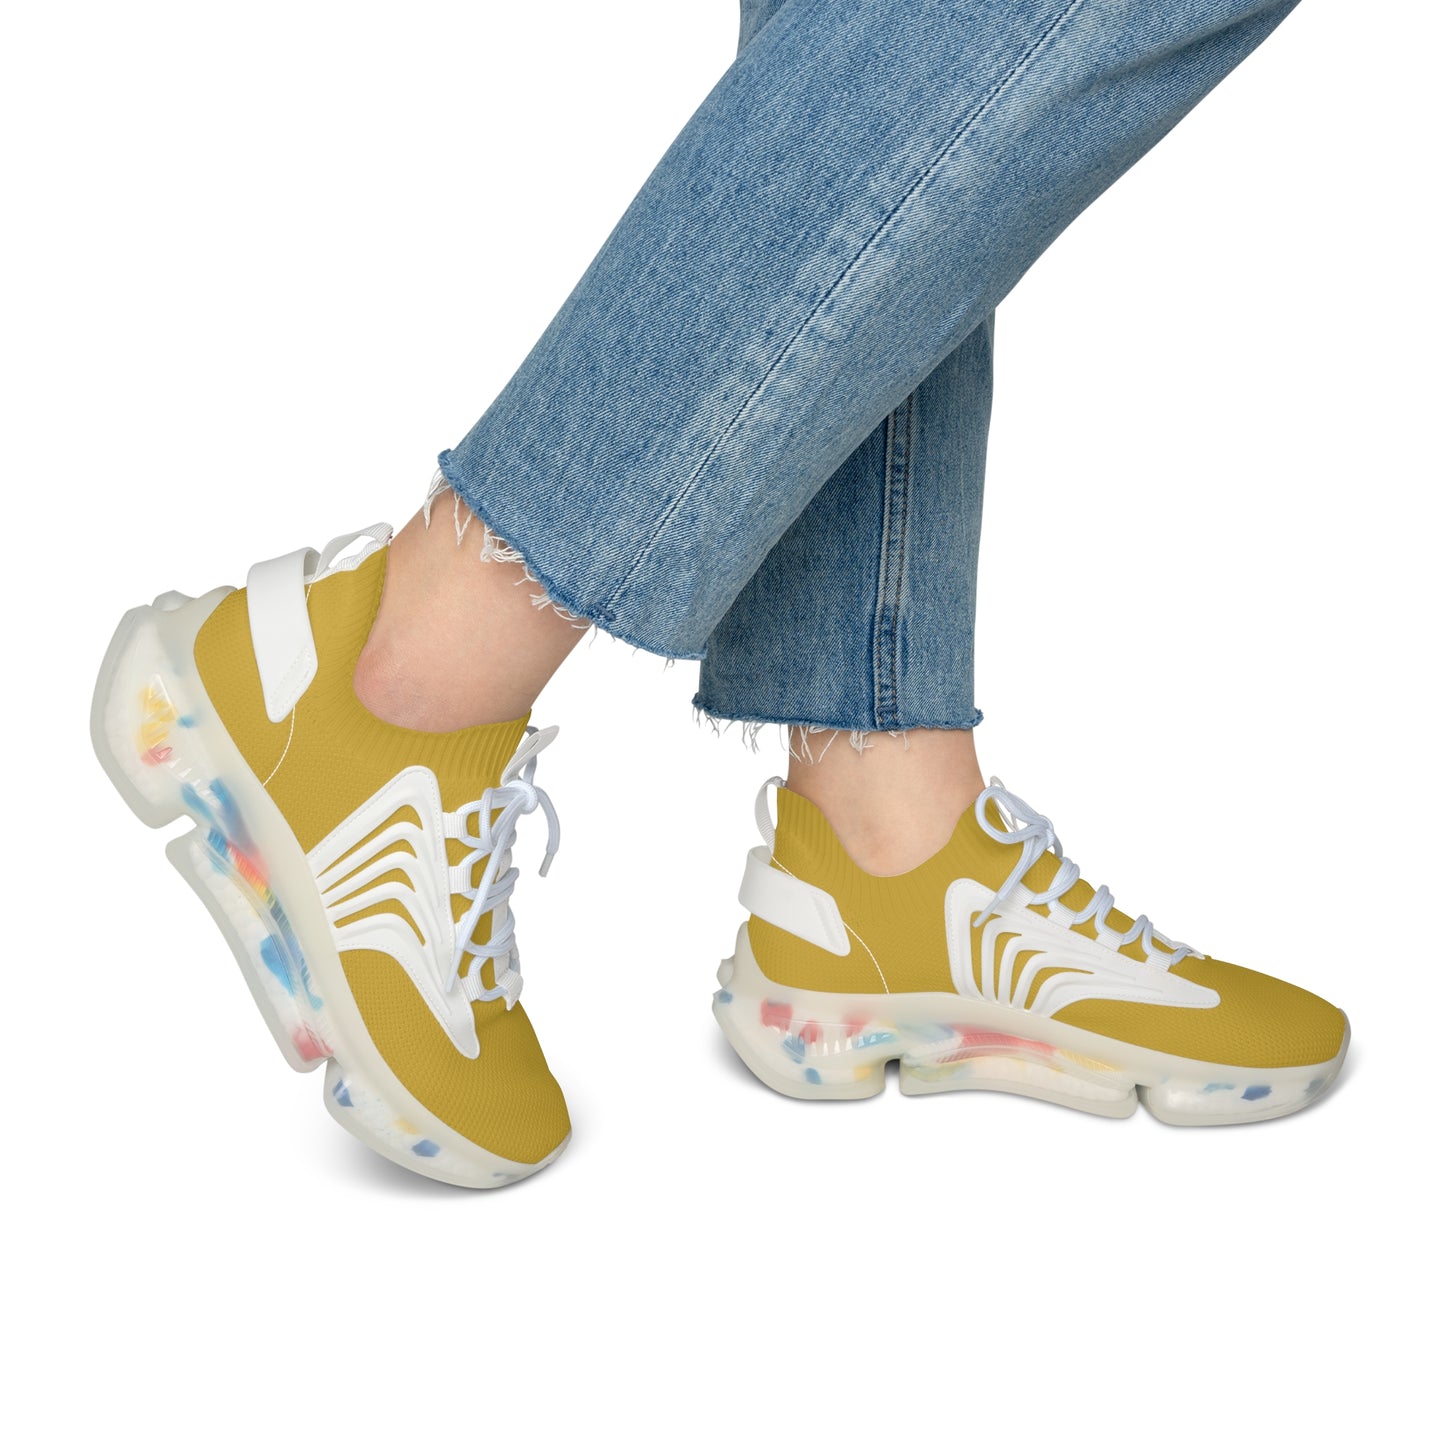 Metallic Gold Women's Mesh Sneakers